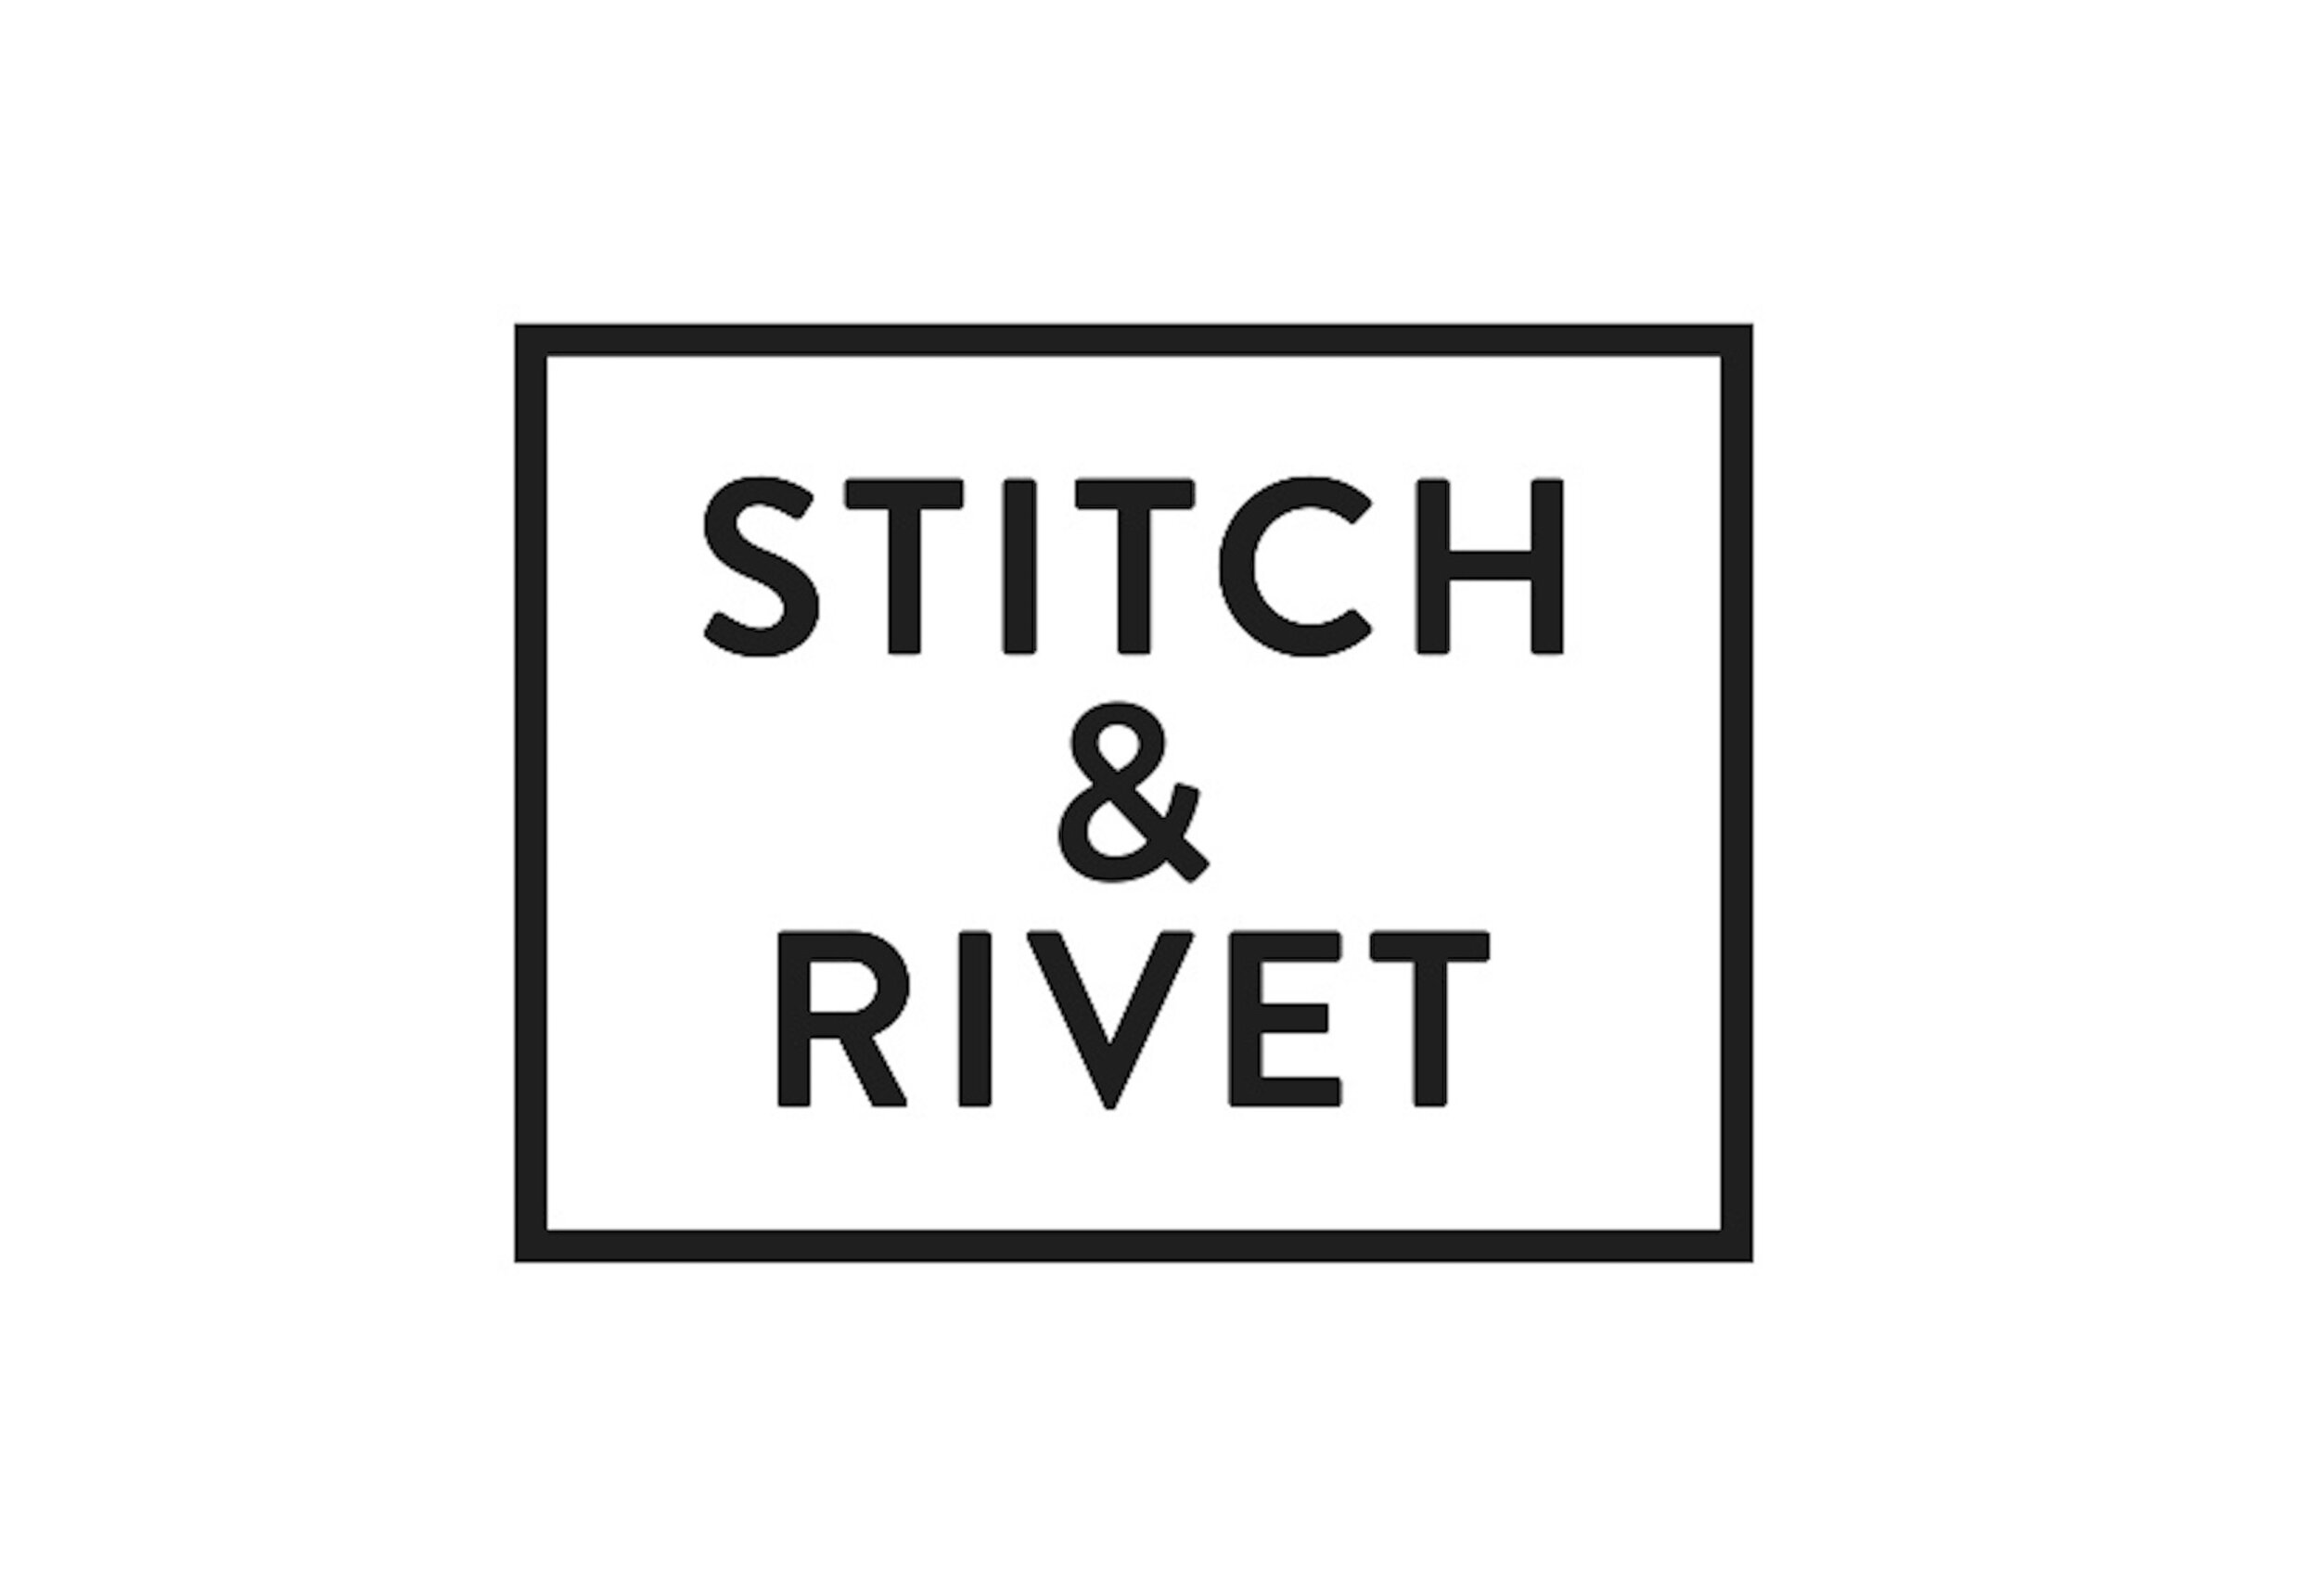 Small Waxed Canvas Zipper Pouch — Stitch & Rivet